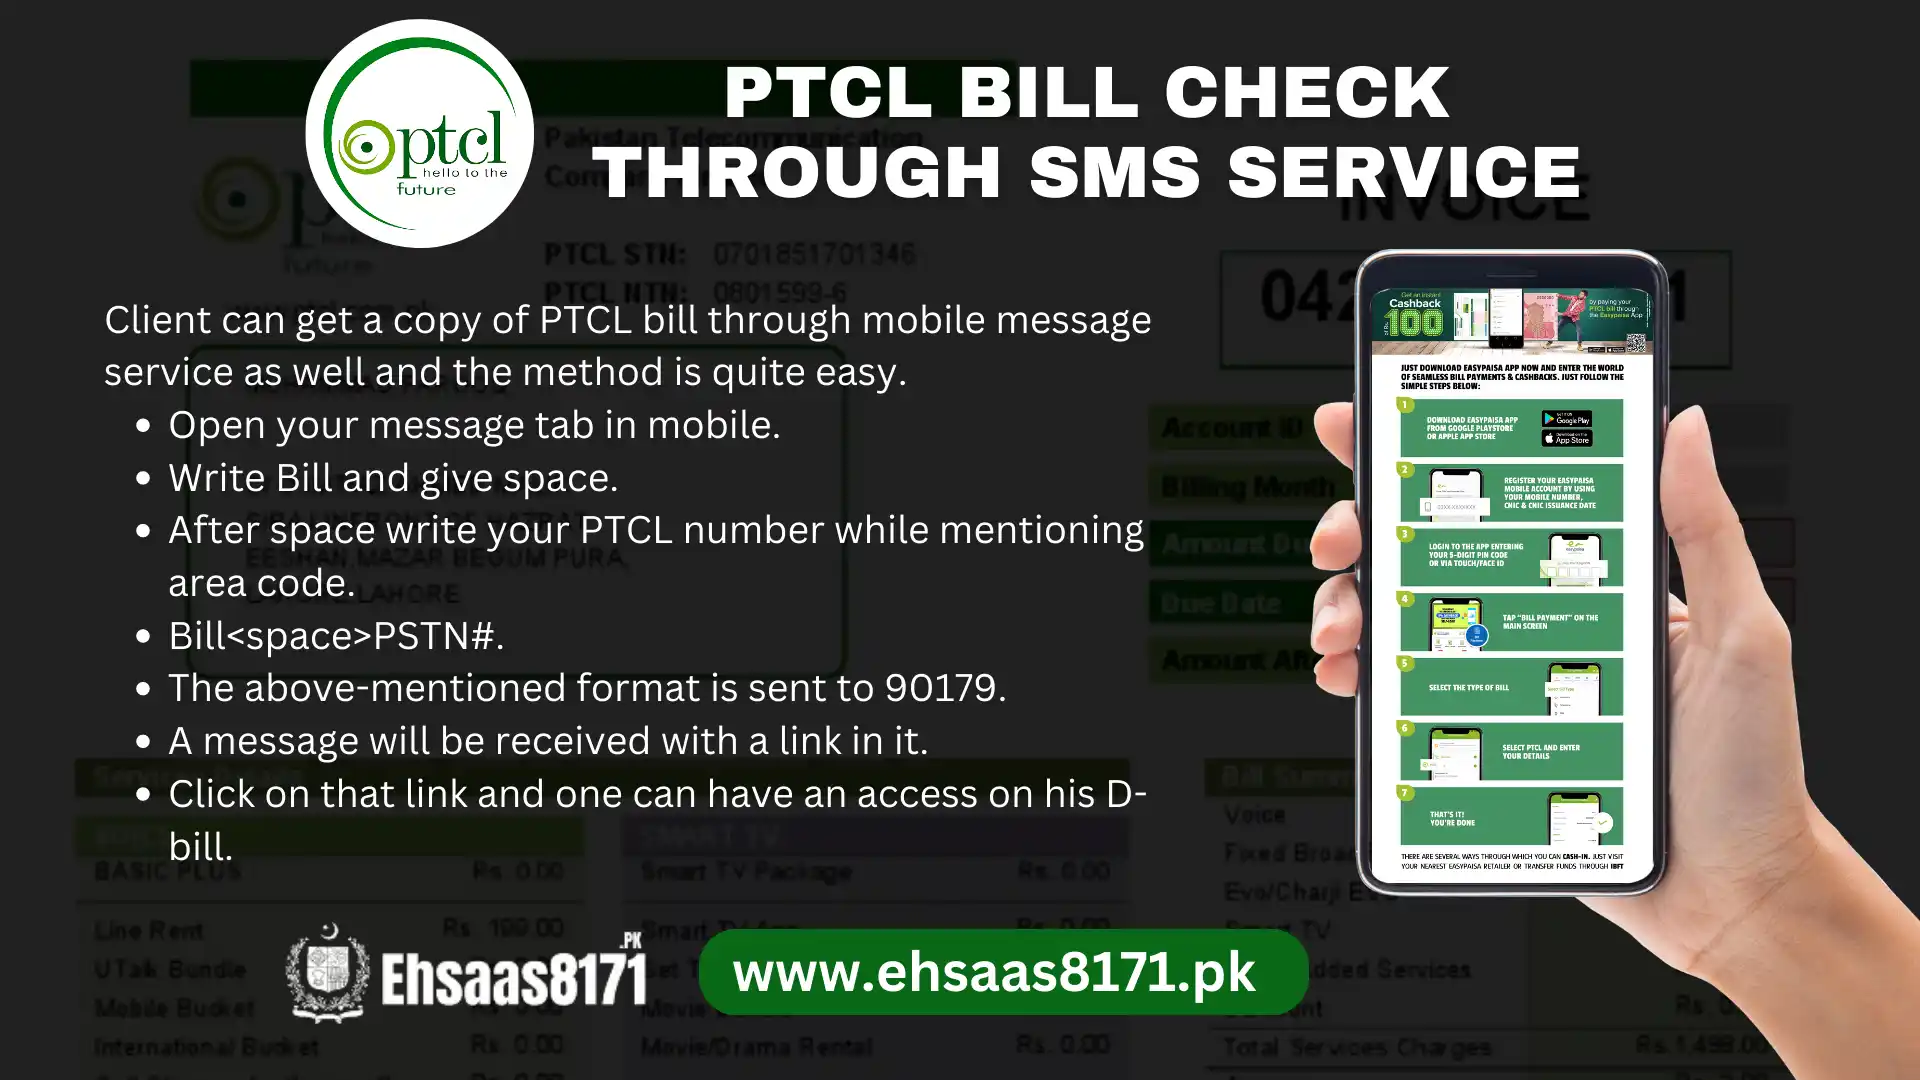 PTCL bill check through SMS service